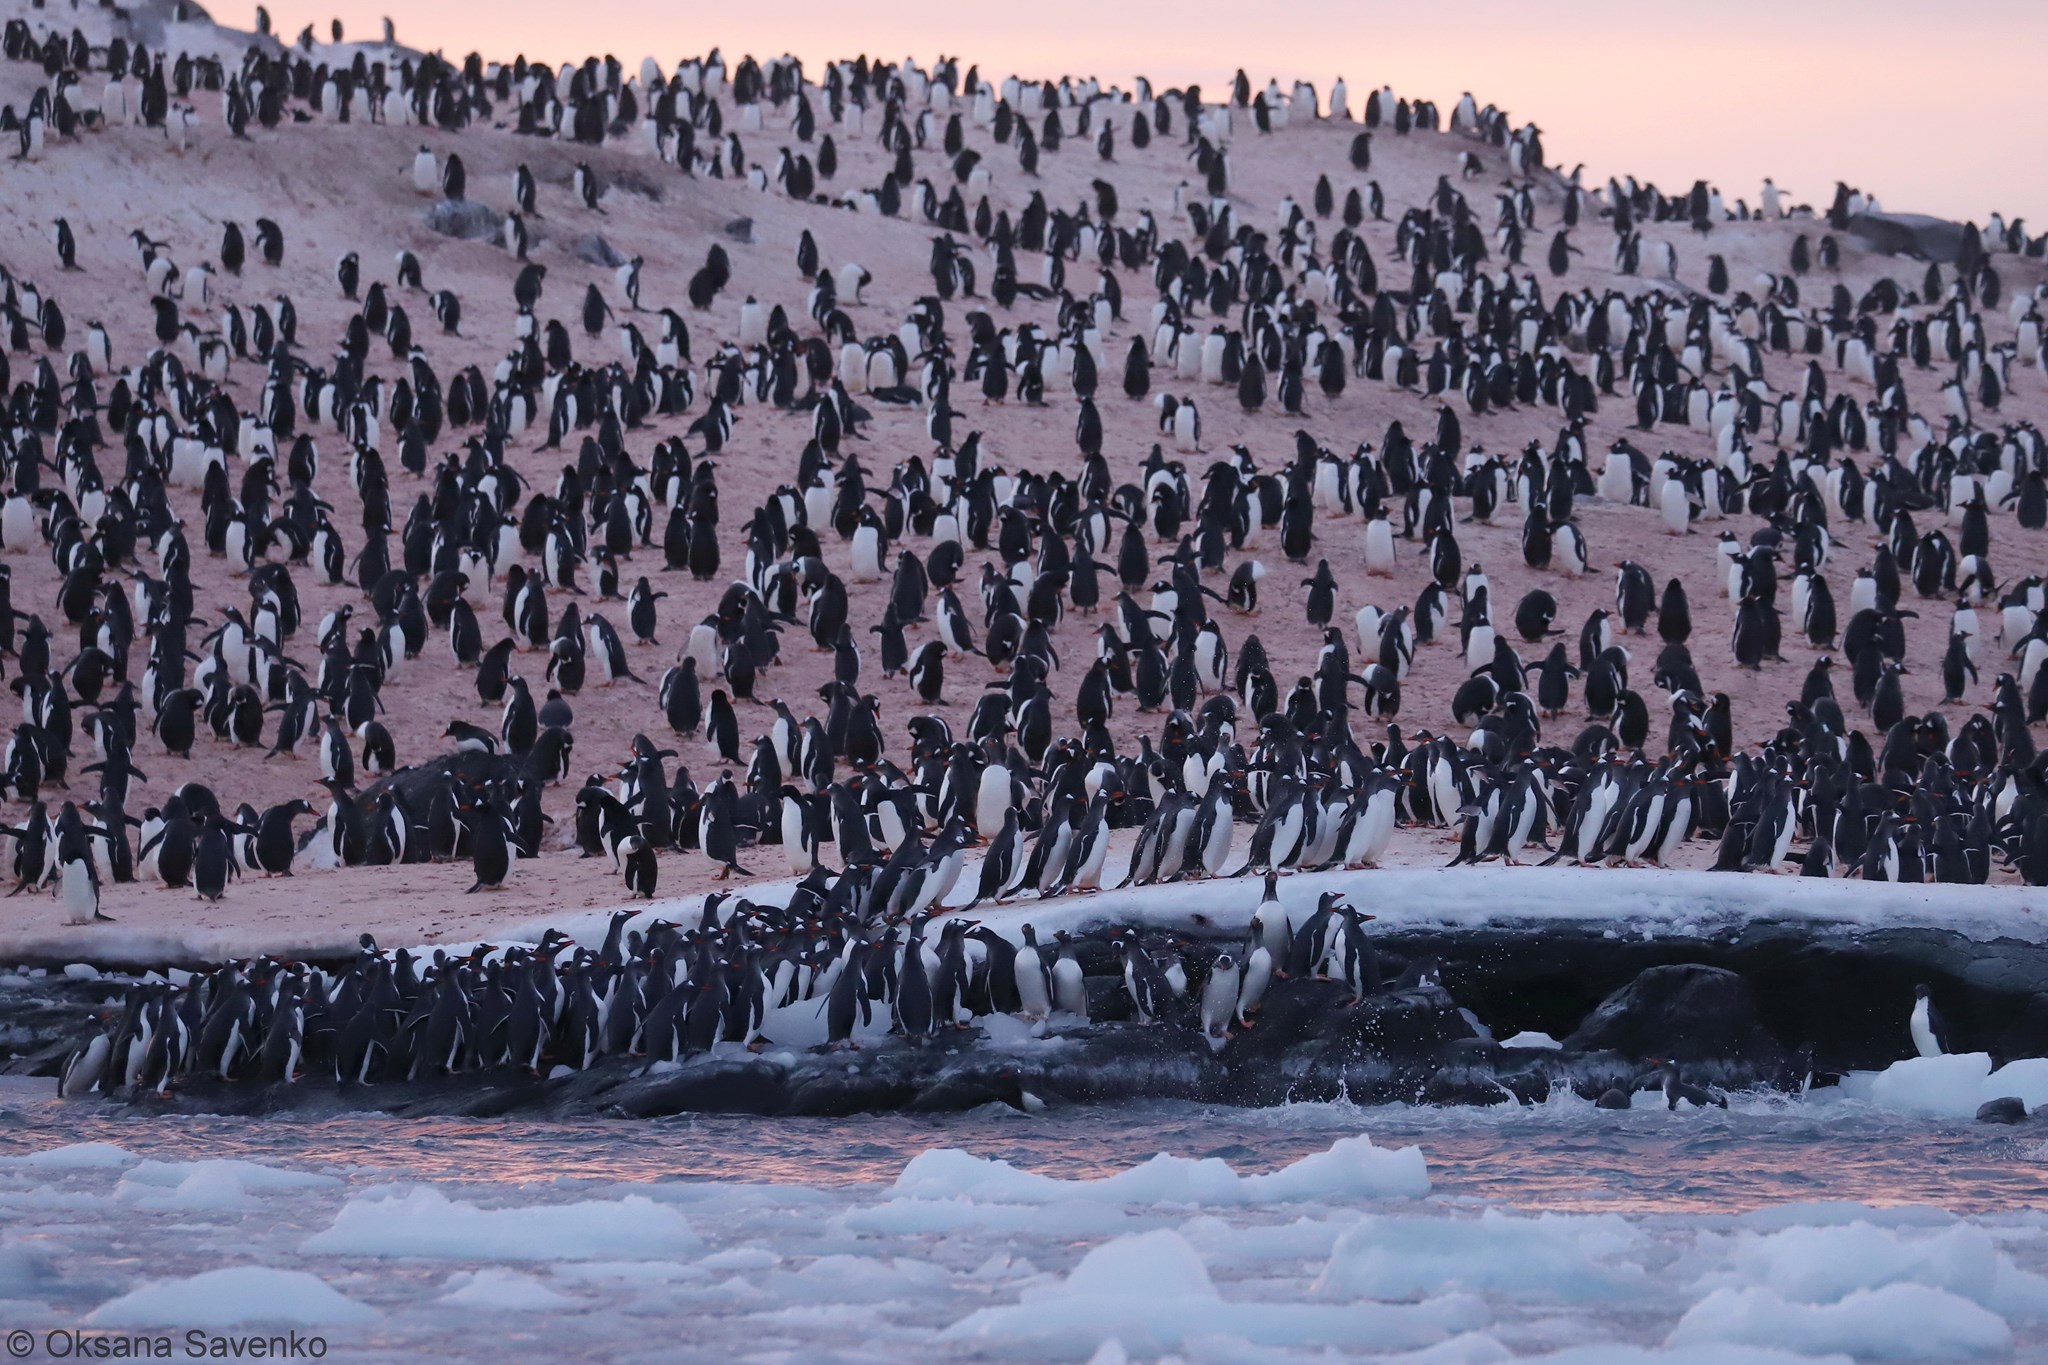 Thousands of Penguins Near the Akademik Vernadsky Station